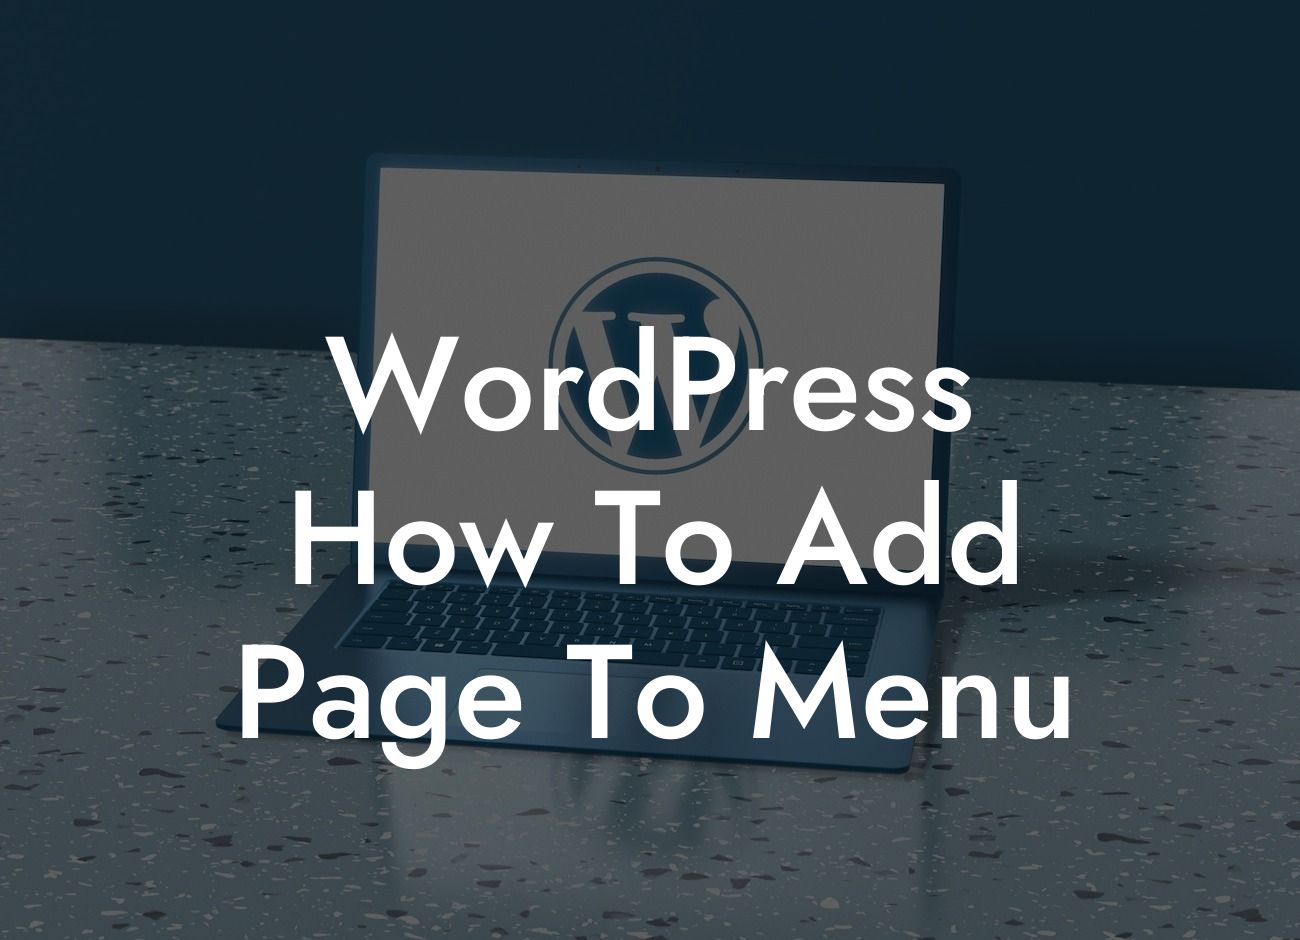 WordPress How To Add Page To Menu